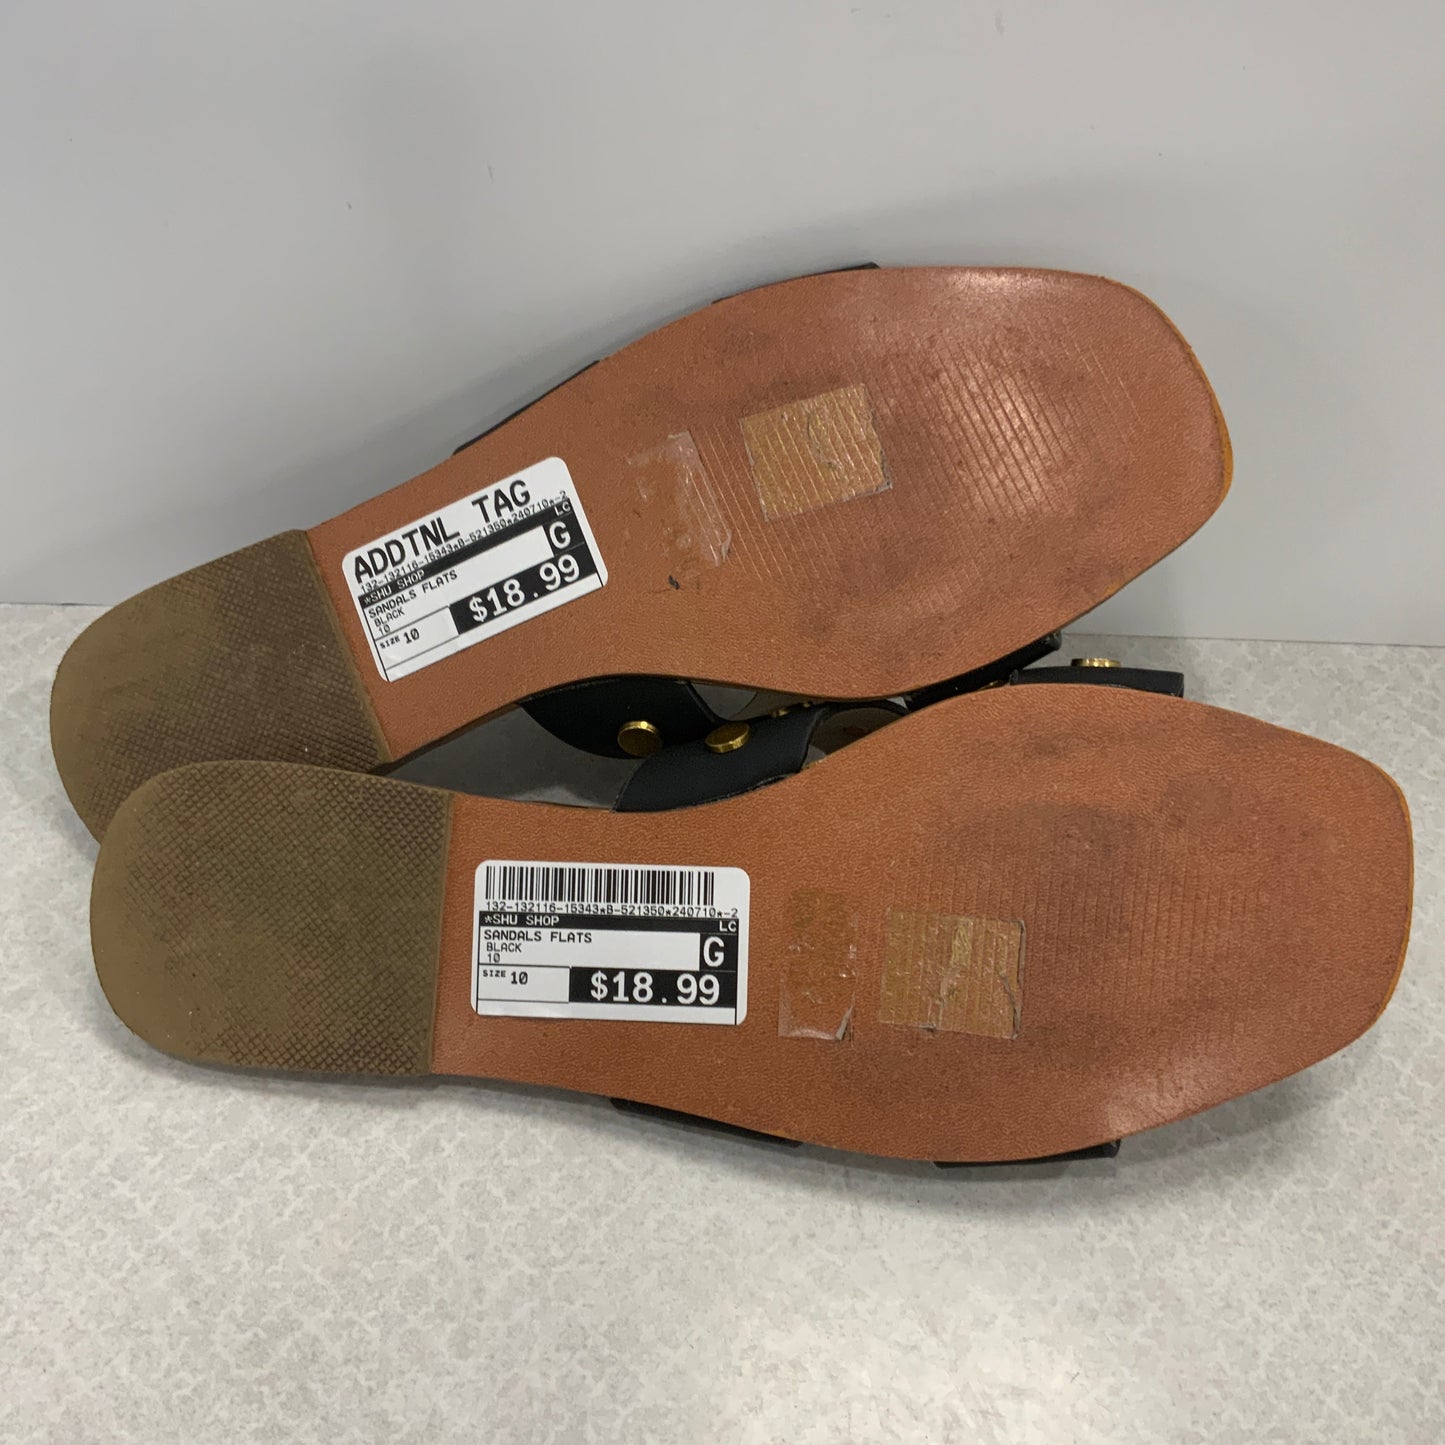 Black Sandals Flats Shu Shop, Size 10